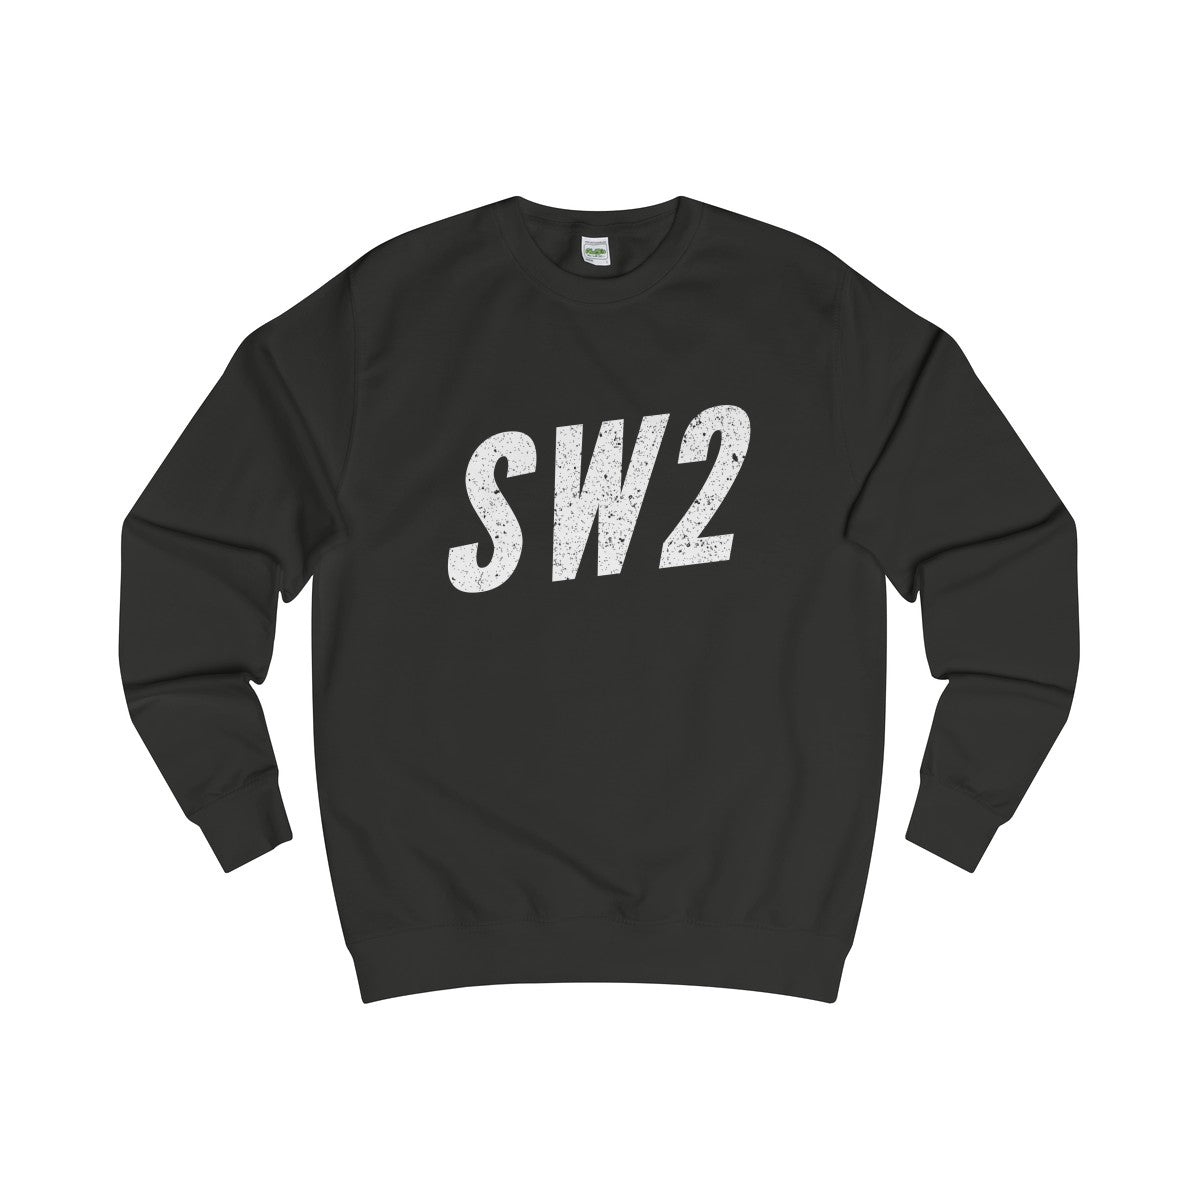 Streatham SW2 Sweater